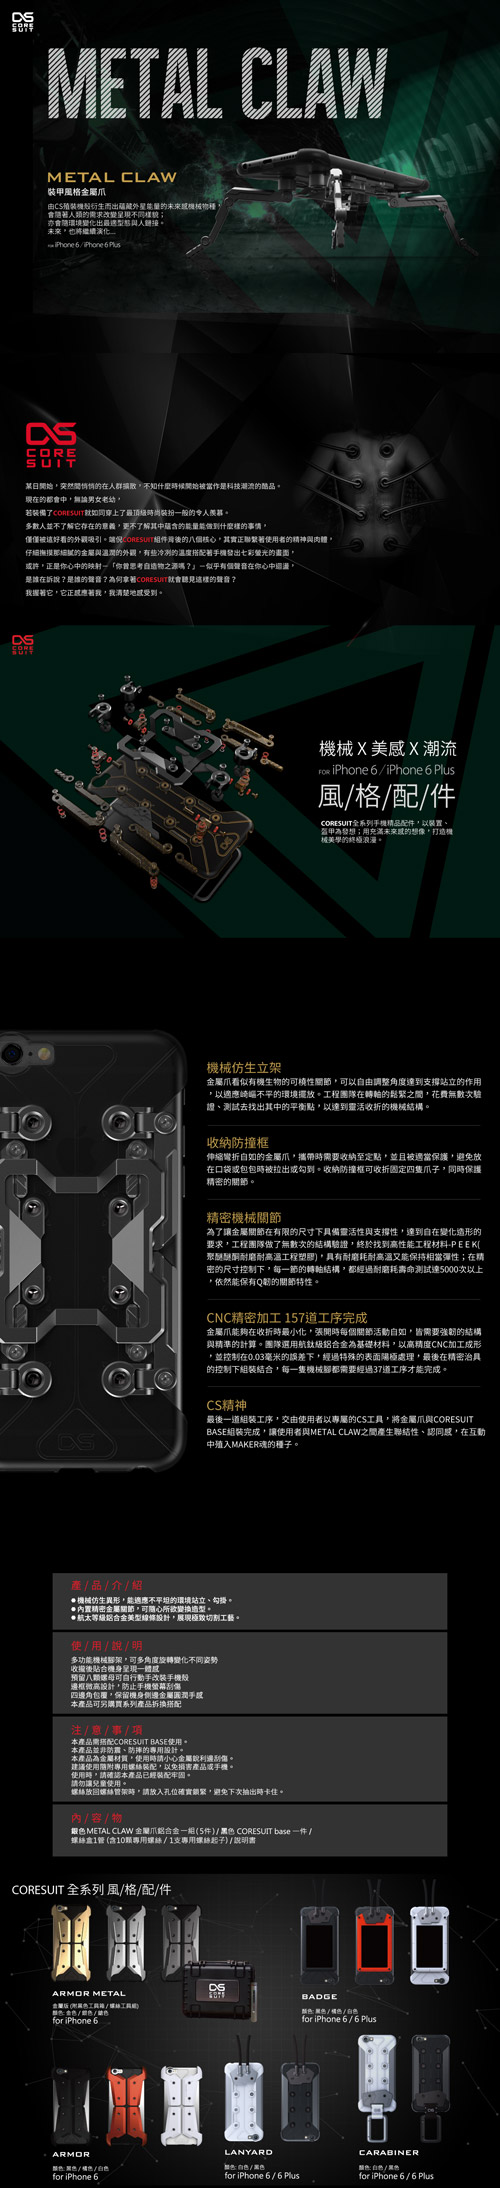 CORESUIT METAL CLAW裝甲風格金屬爪 手機殼 (含工具箱) iPhone 6/6 Plus